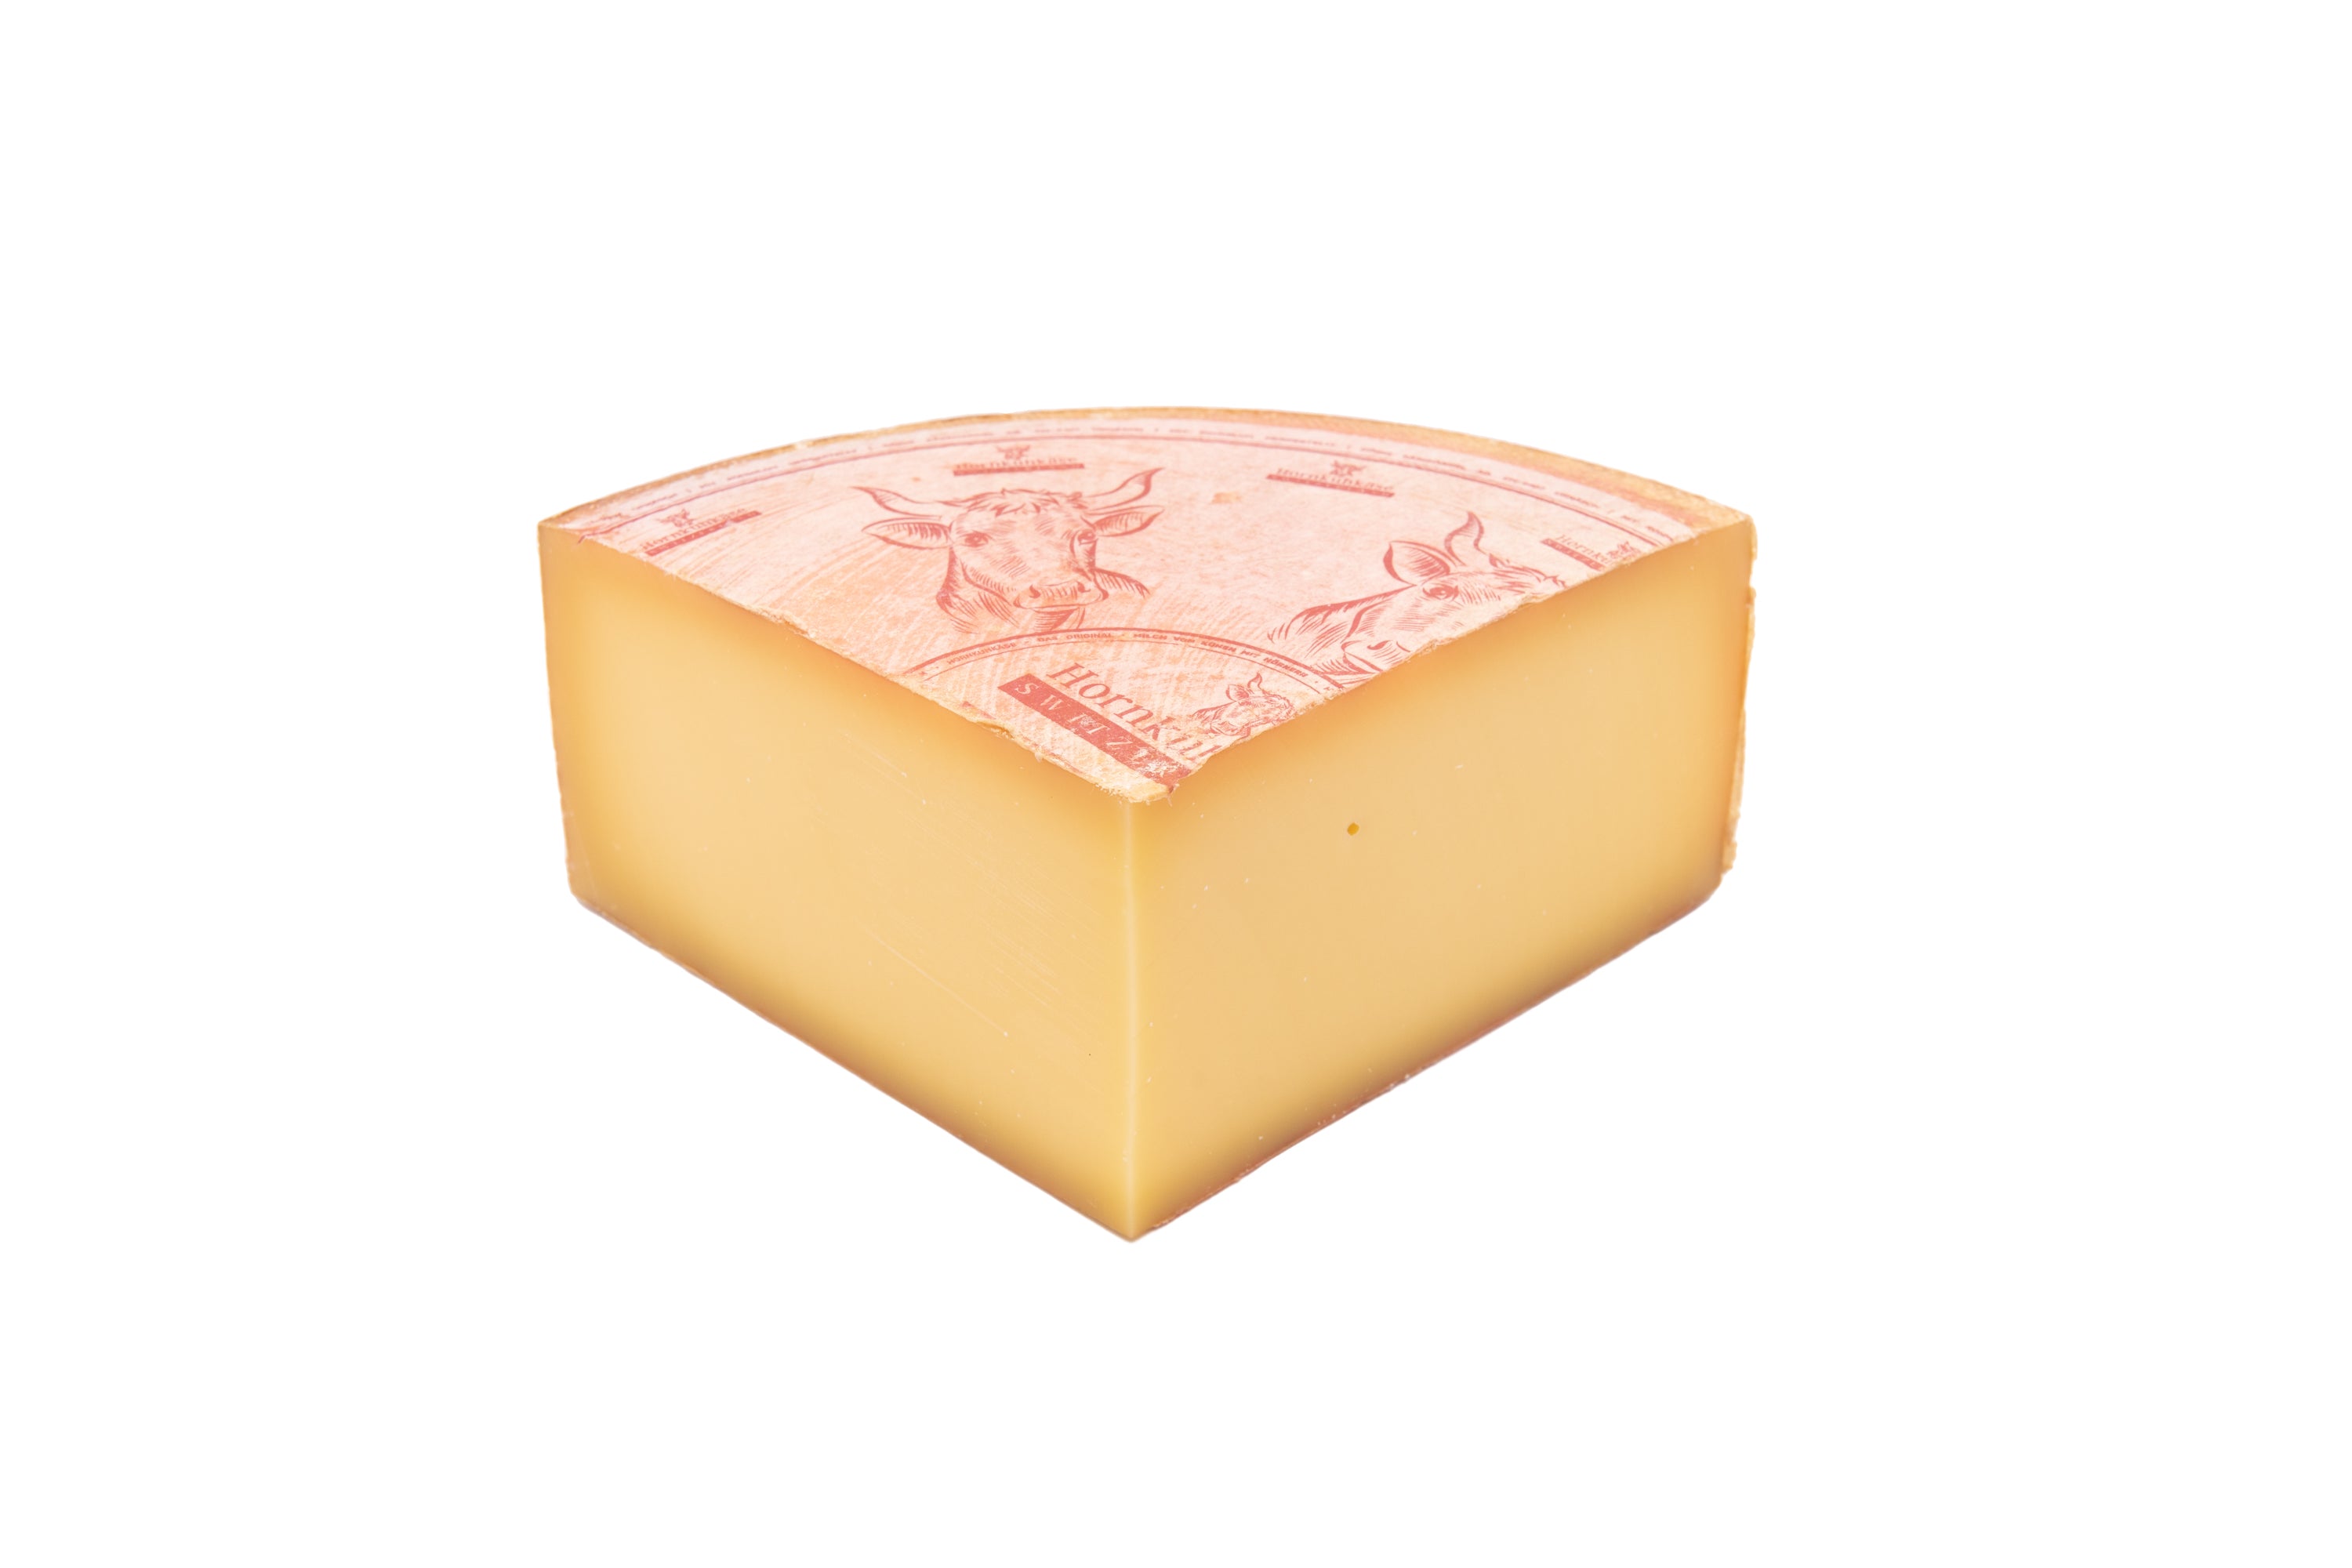 Cheese - Hornkuhkase (Alpenhorn) 8 oz